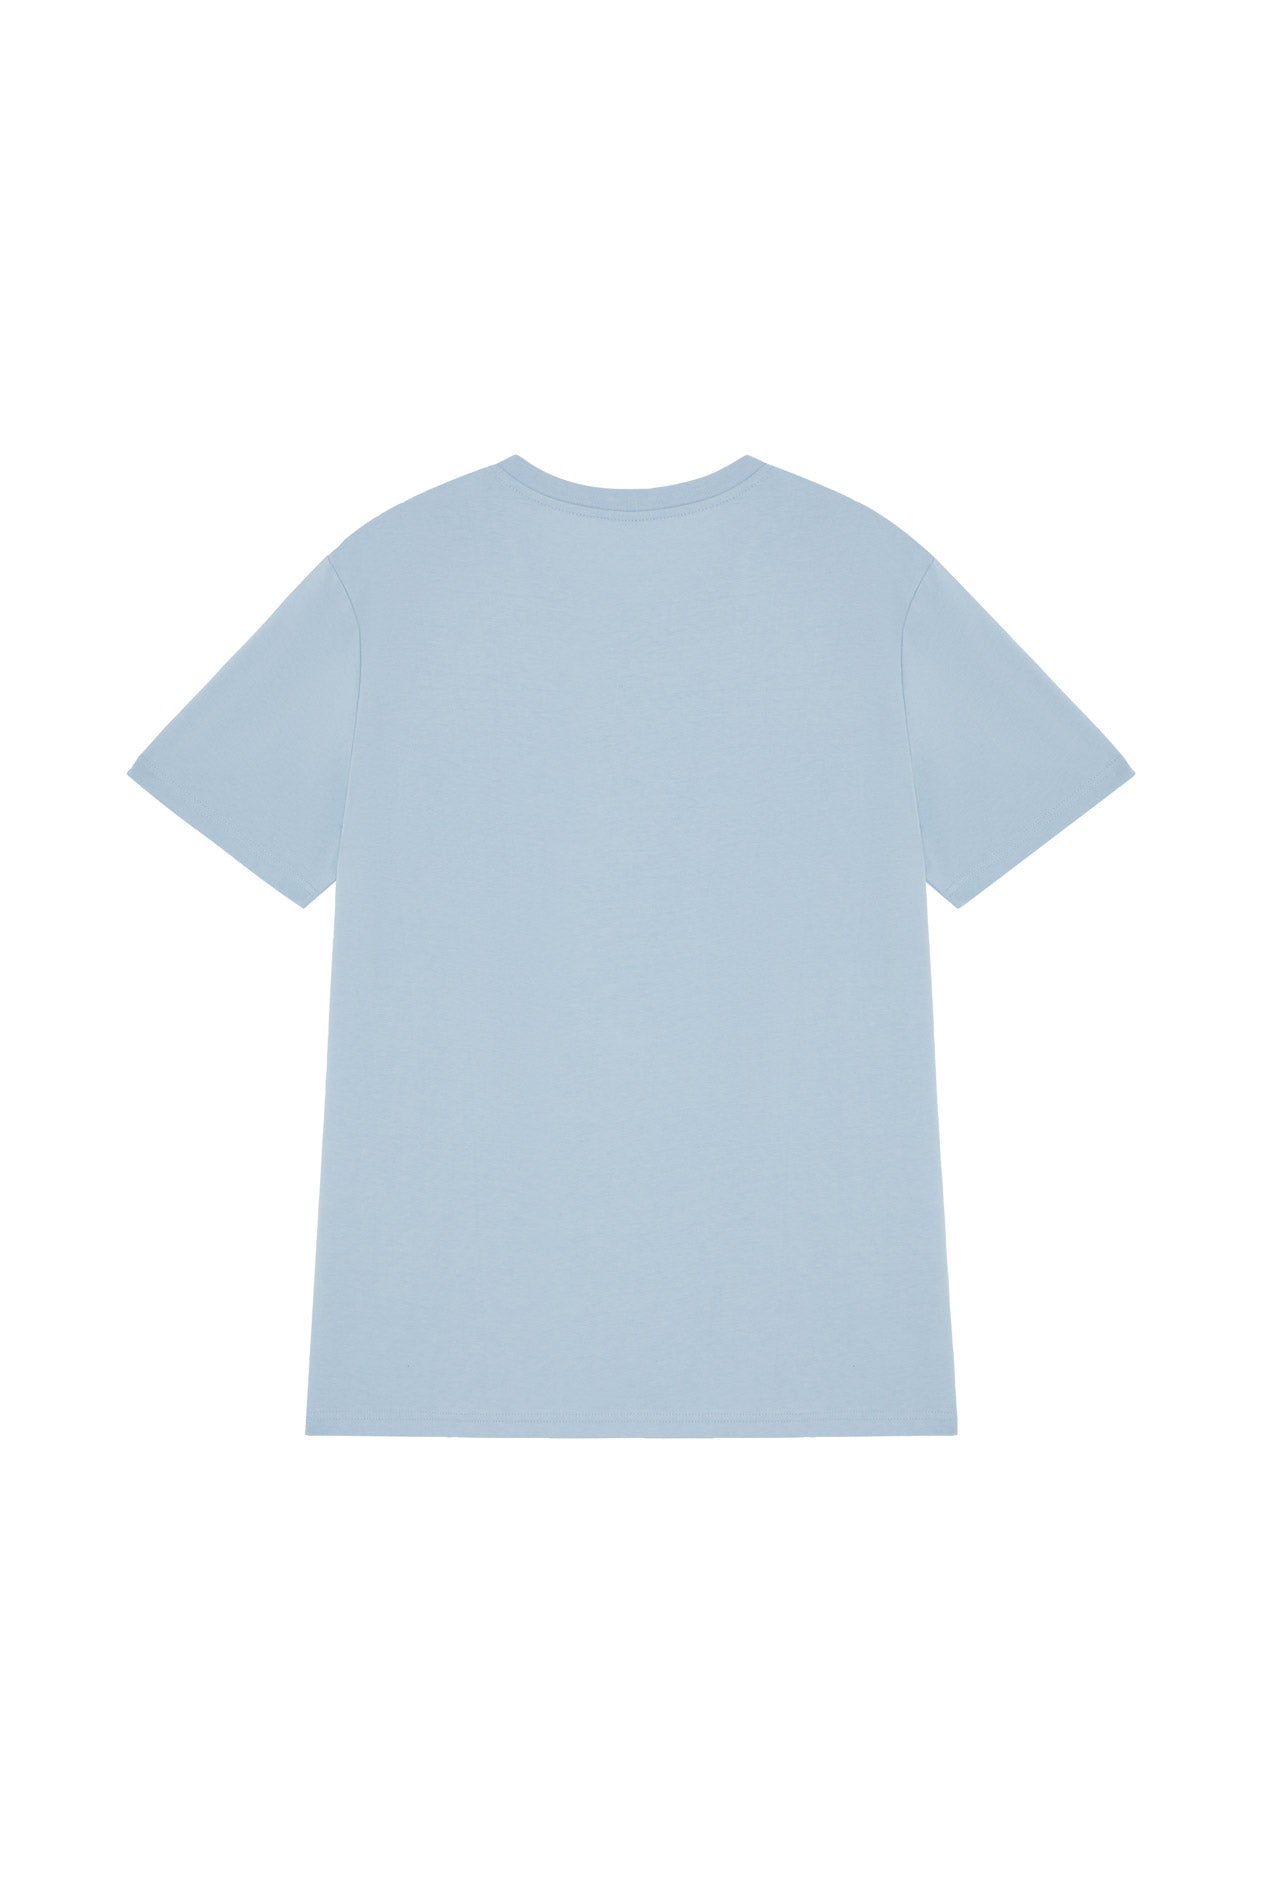 Back of unisex sky blue organic cotton t-shirt